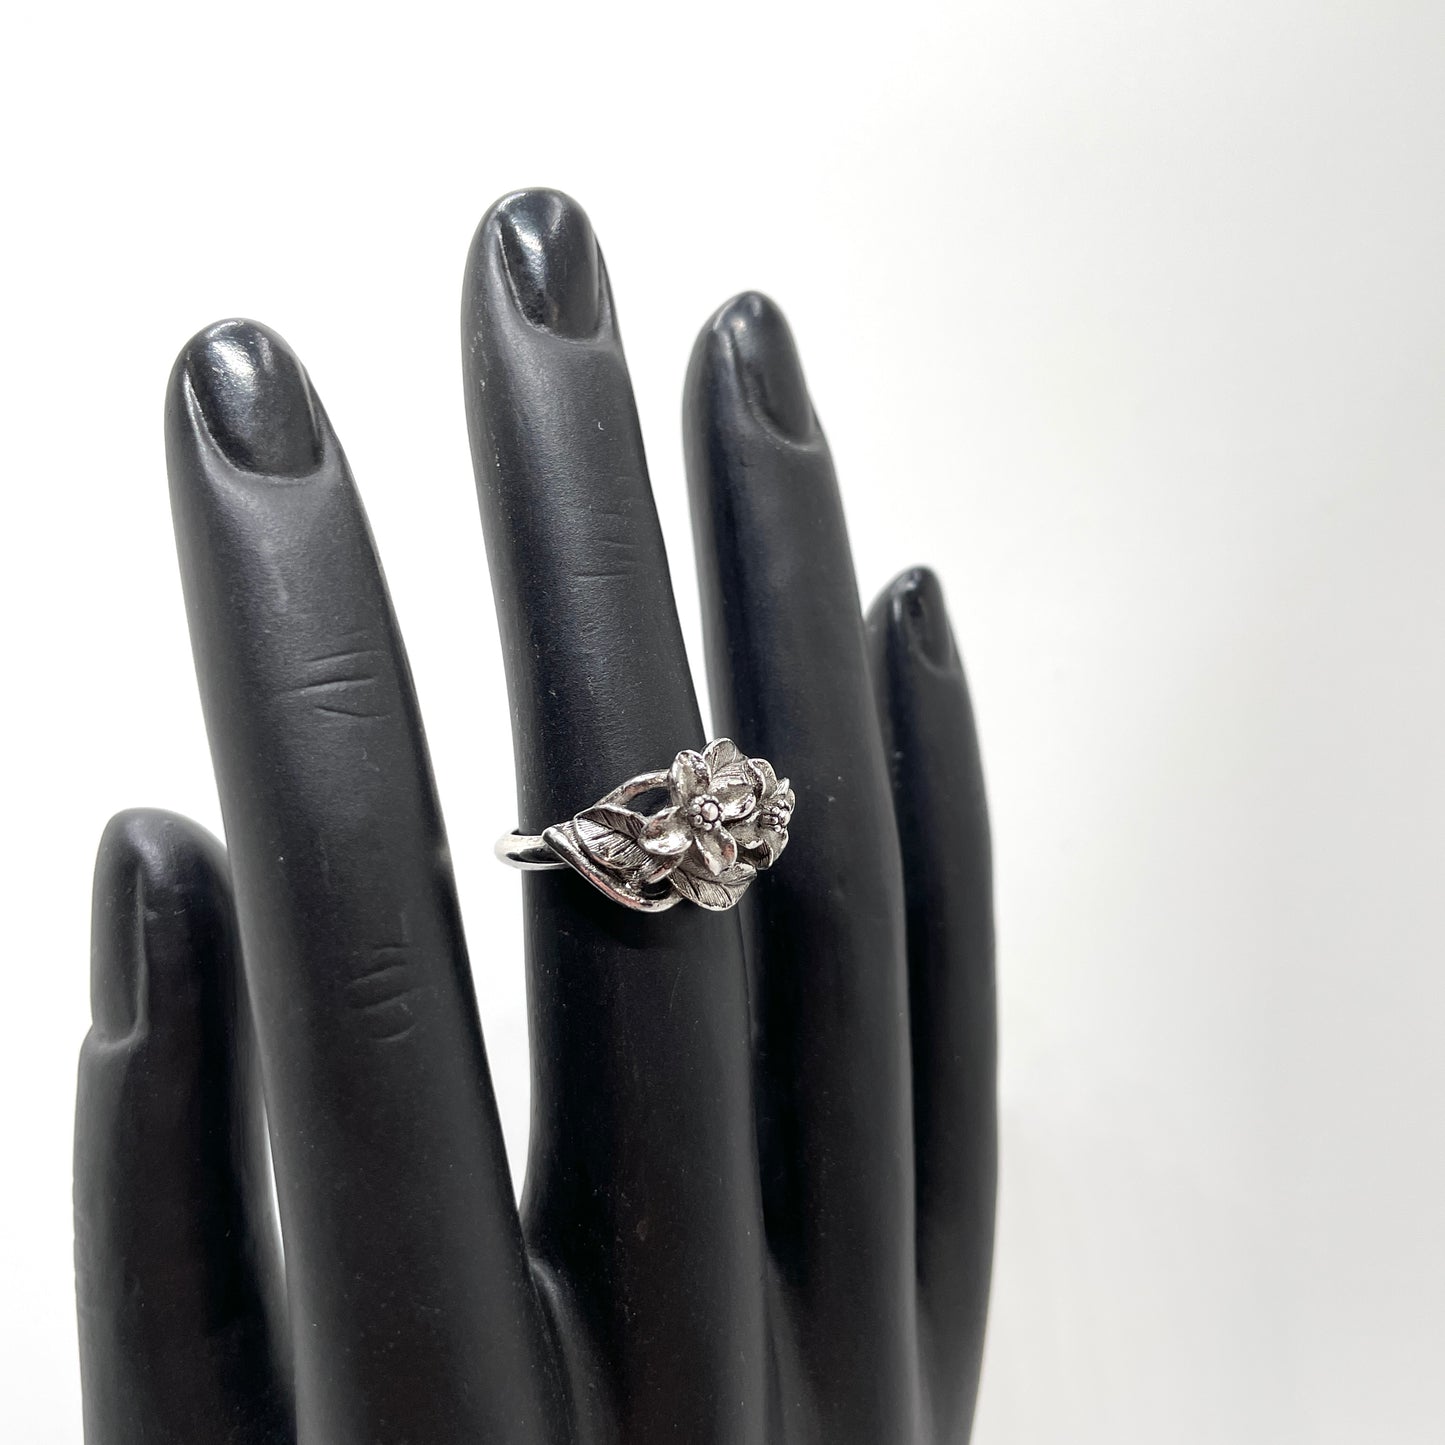 Vintage Avon Flower Ring - Size 6